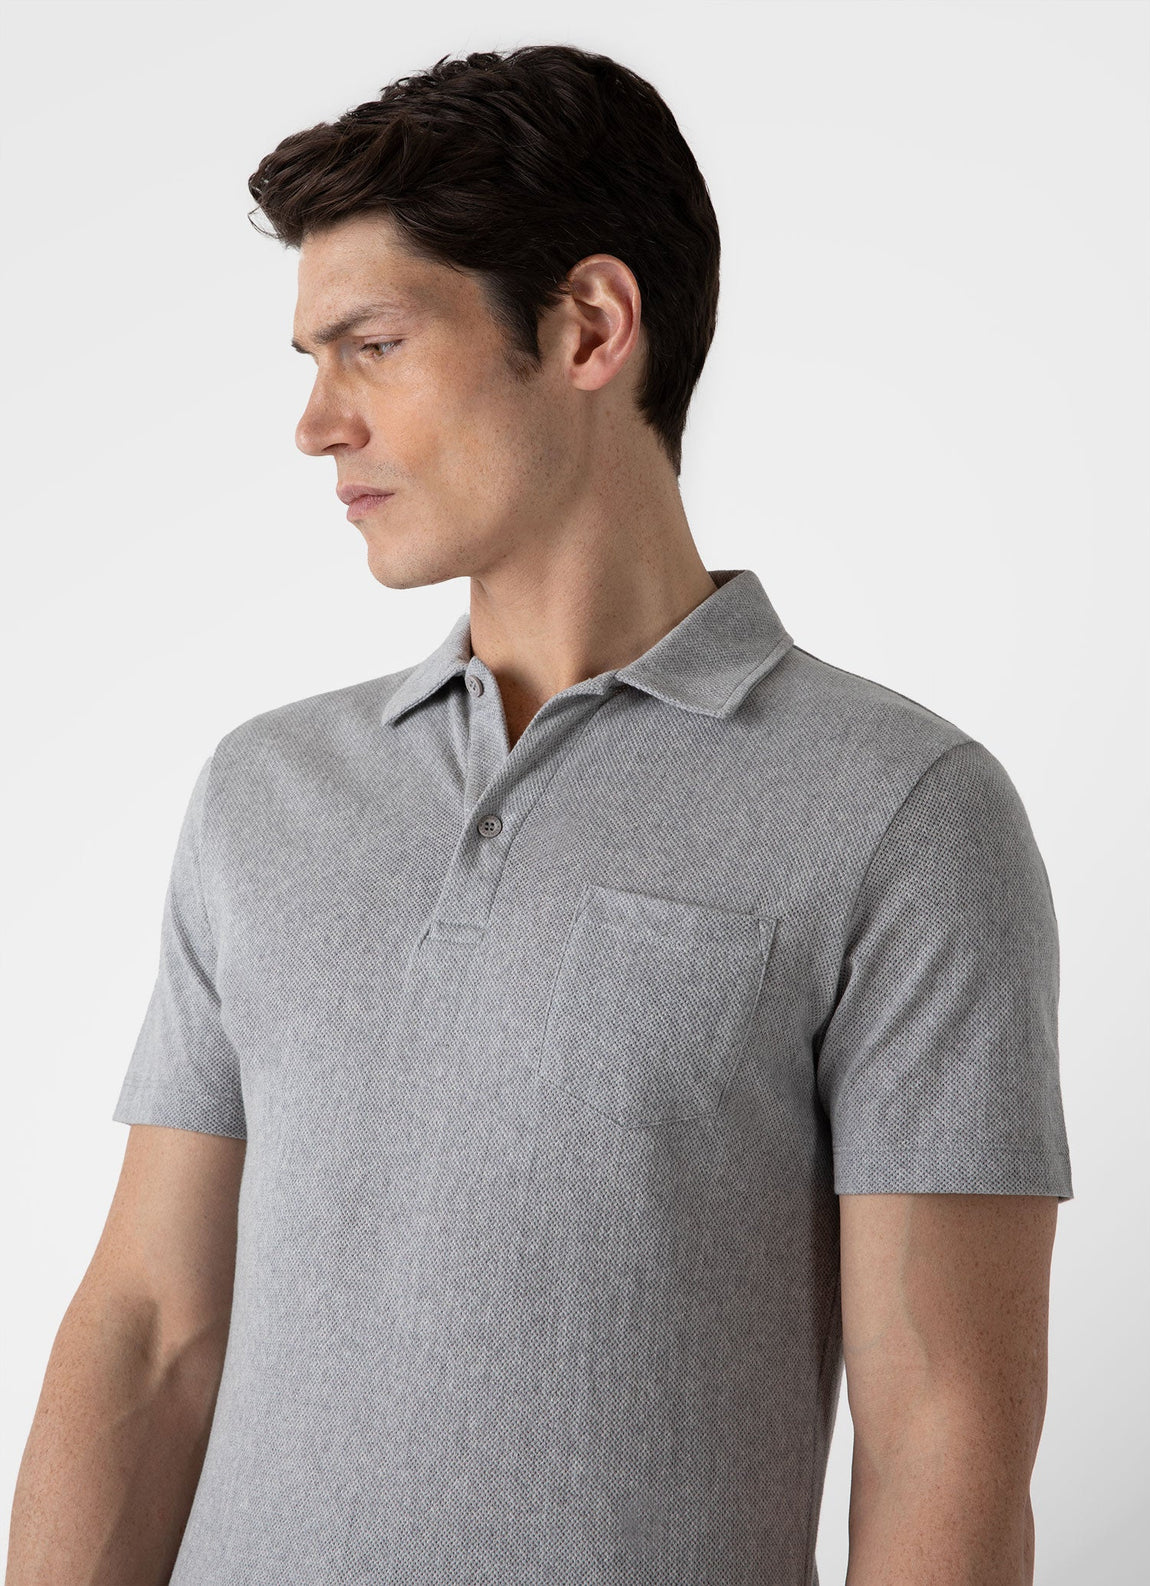 Men's Riviera Polo Shirt in Grey Melange